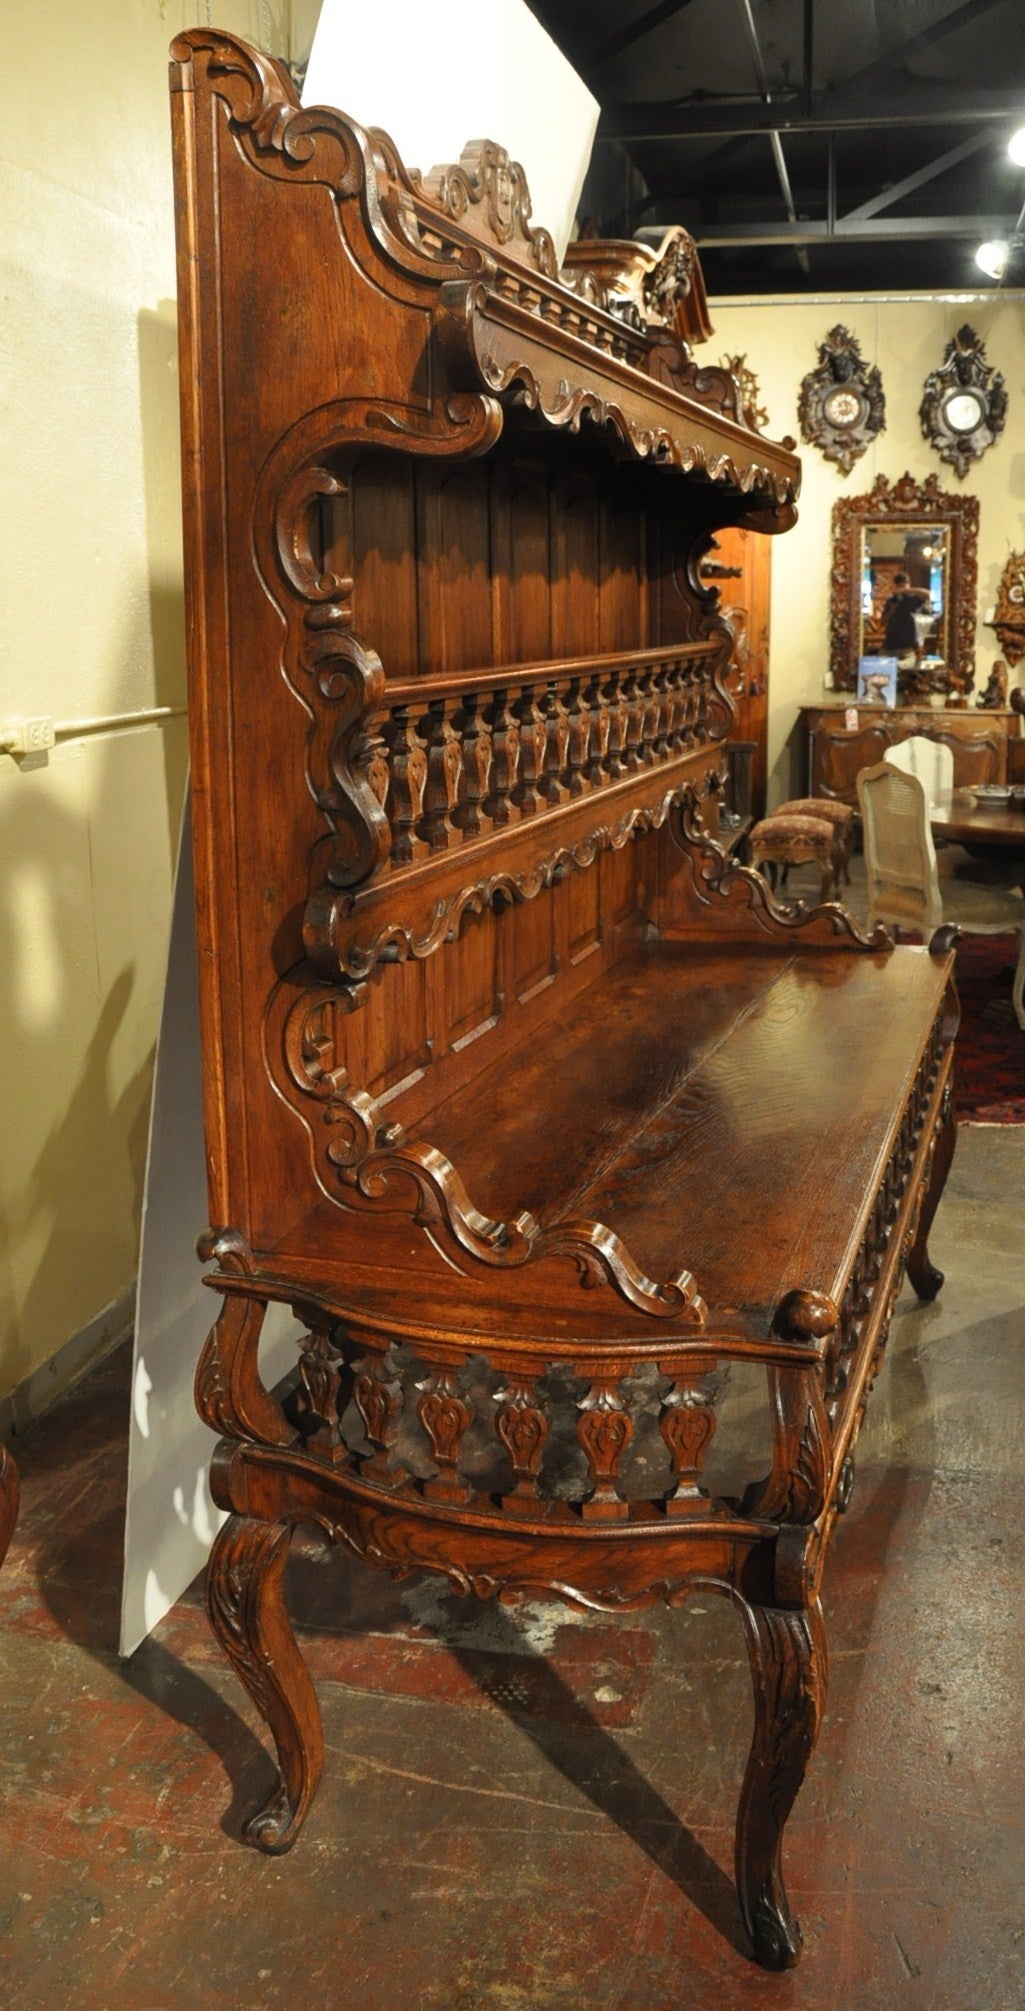 
Antique carved display plate rack, or 